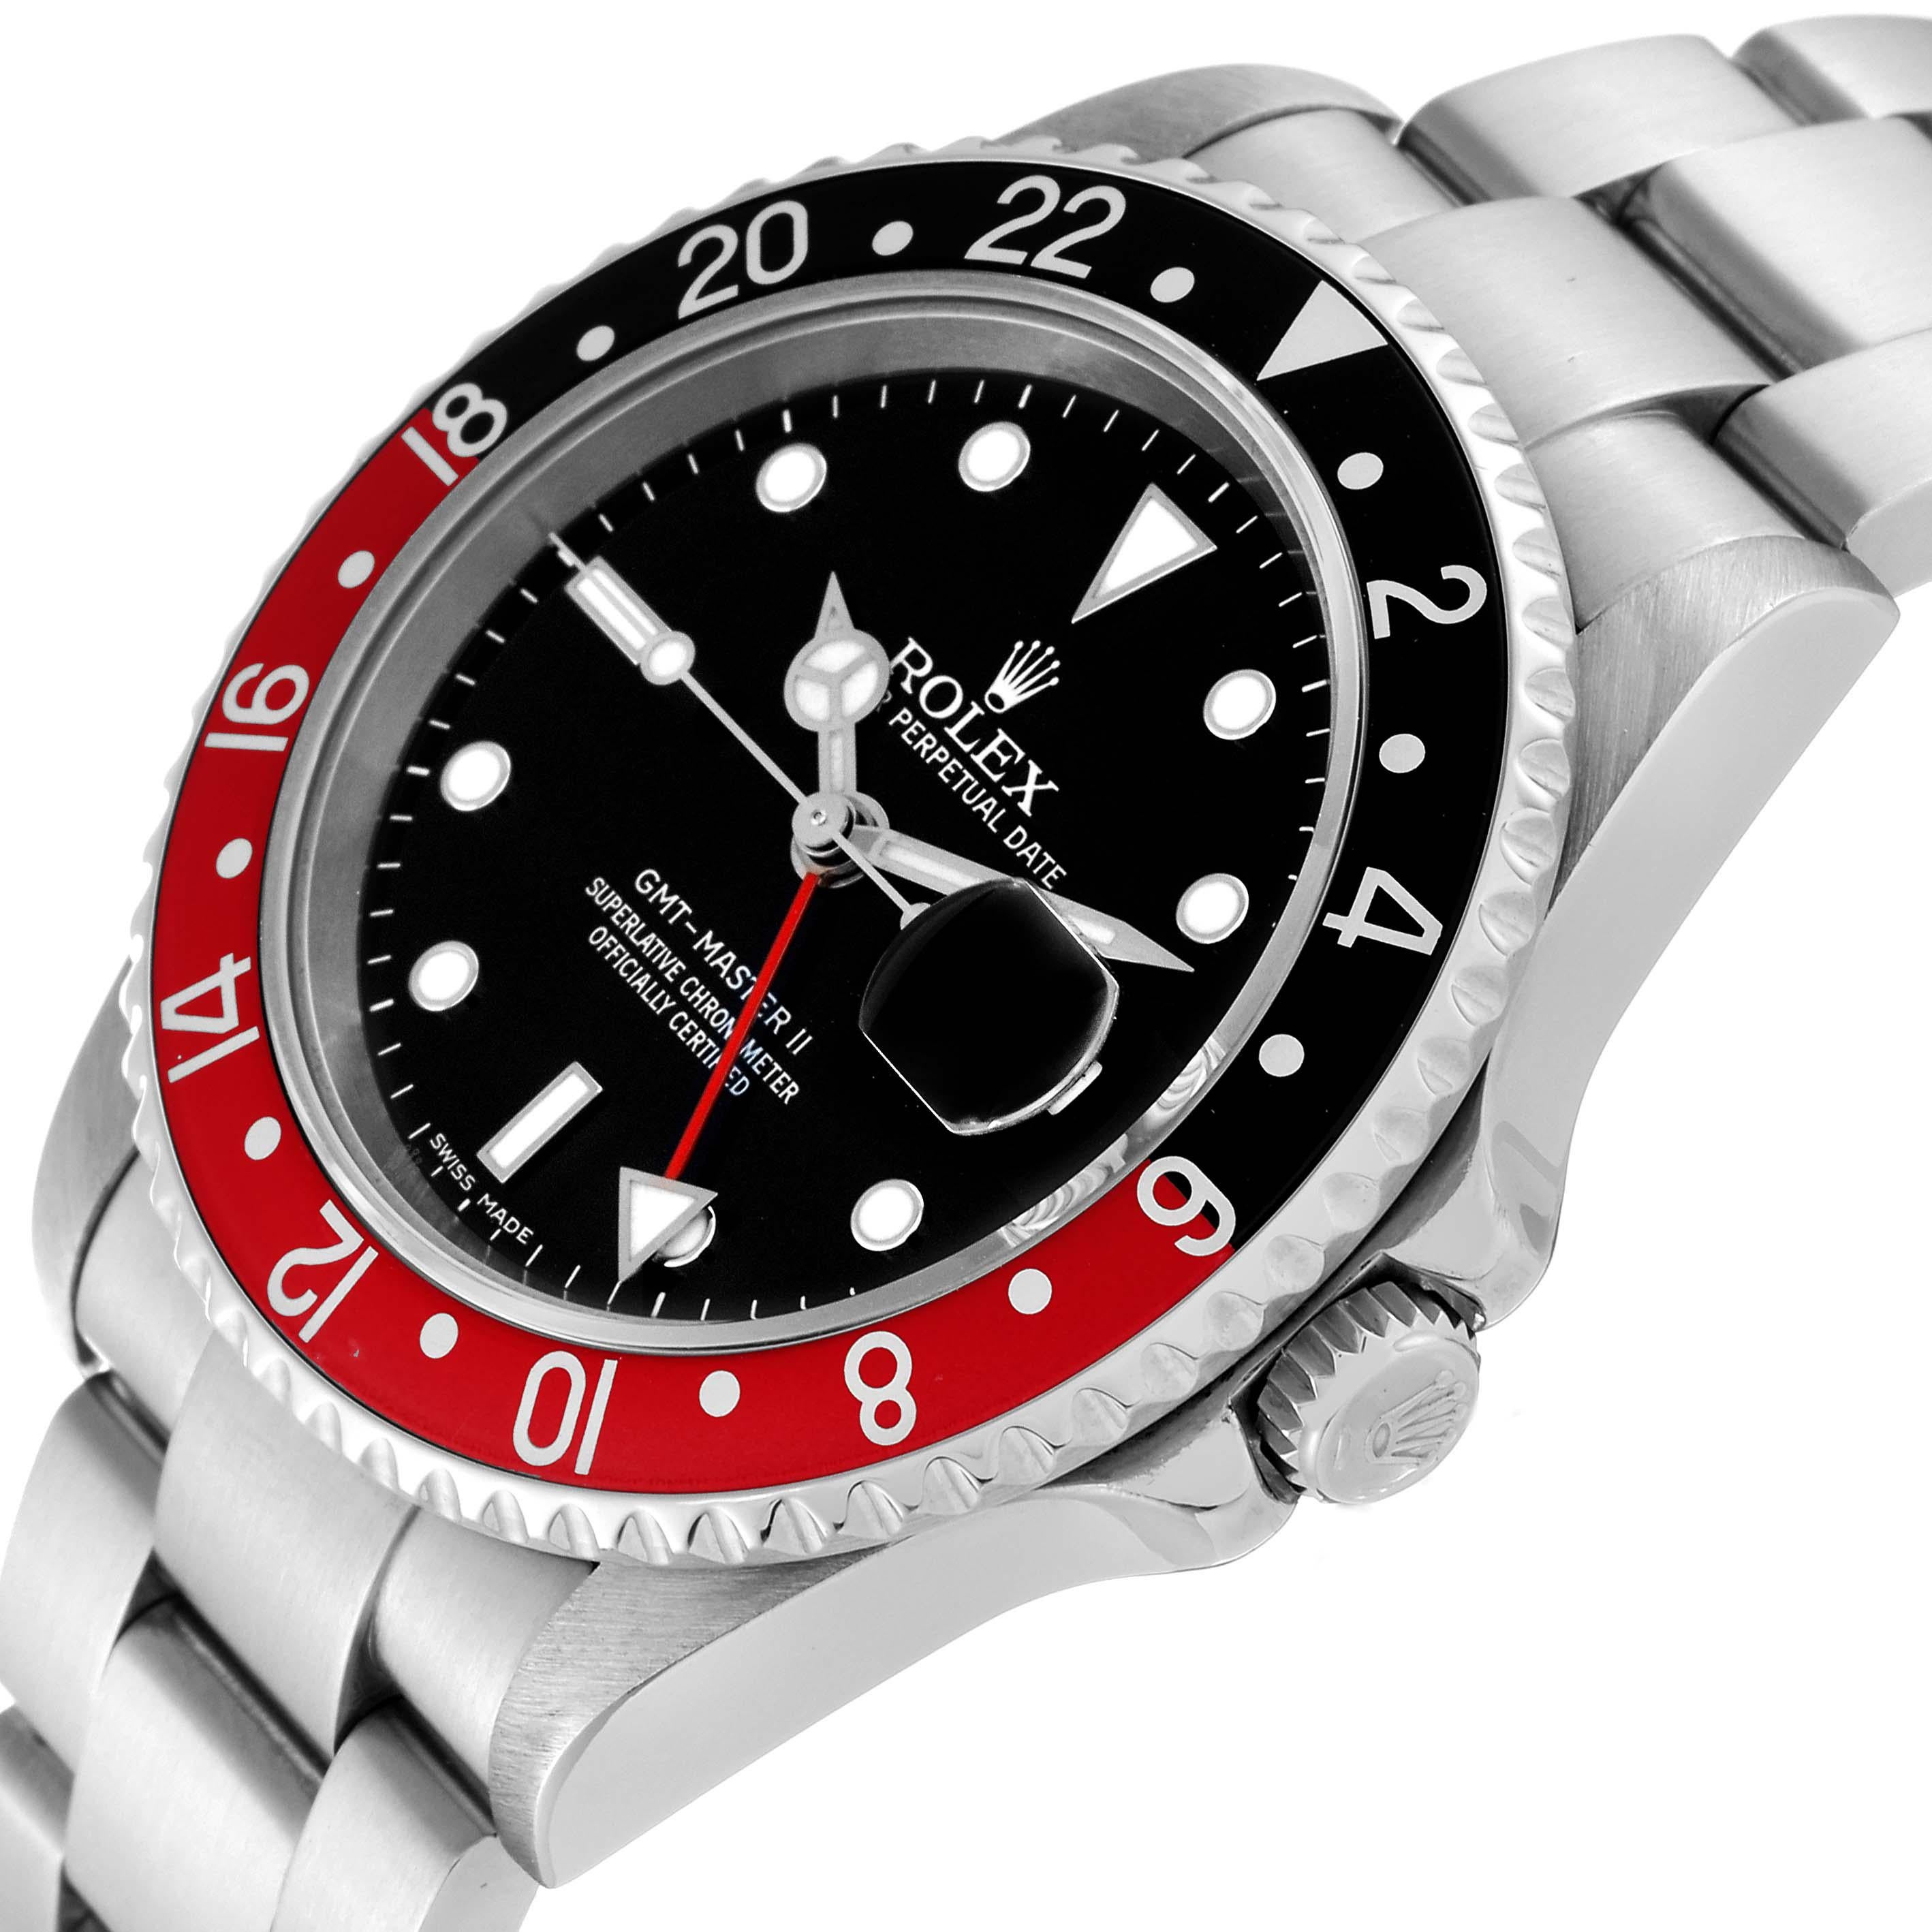 Rolex GMT Master II Black Red Coke Bezel Error Dial Steel Watch 16710 Box Papers 2